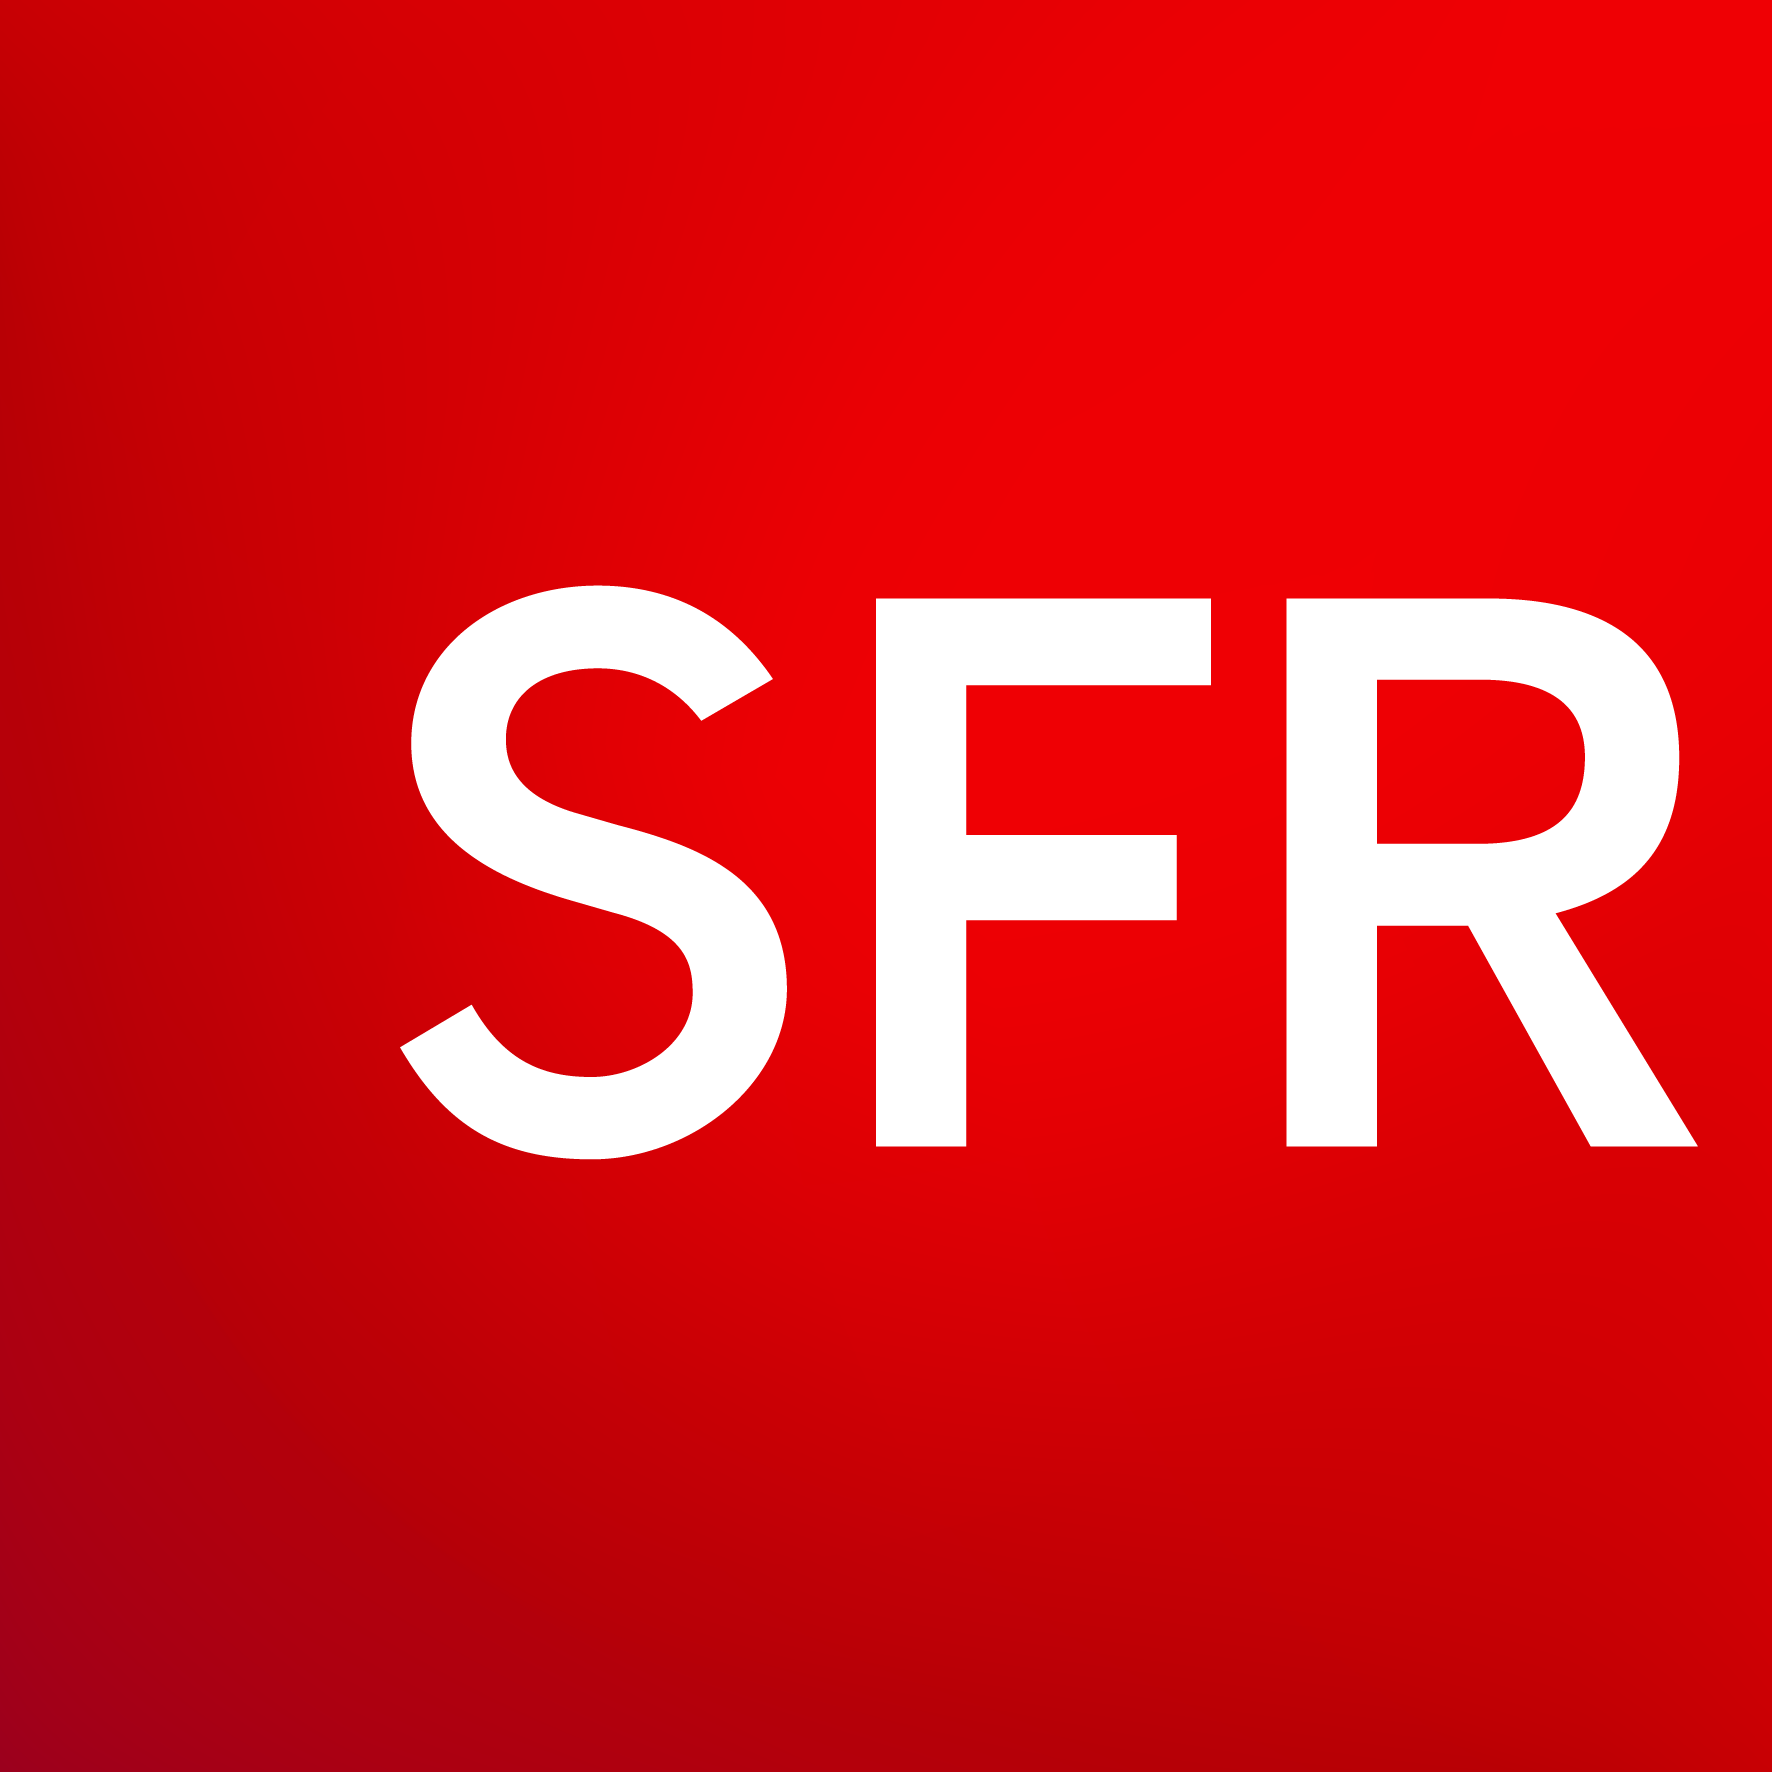 Forfait SFR